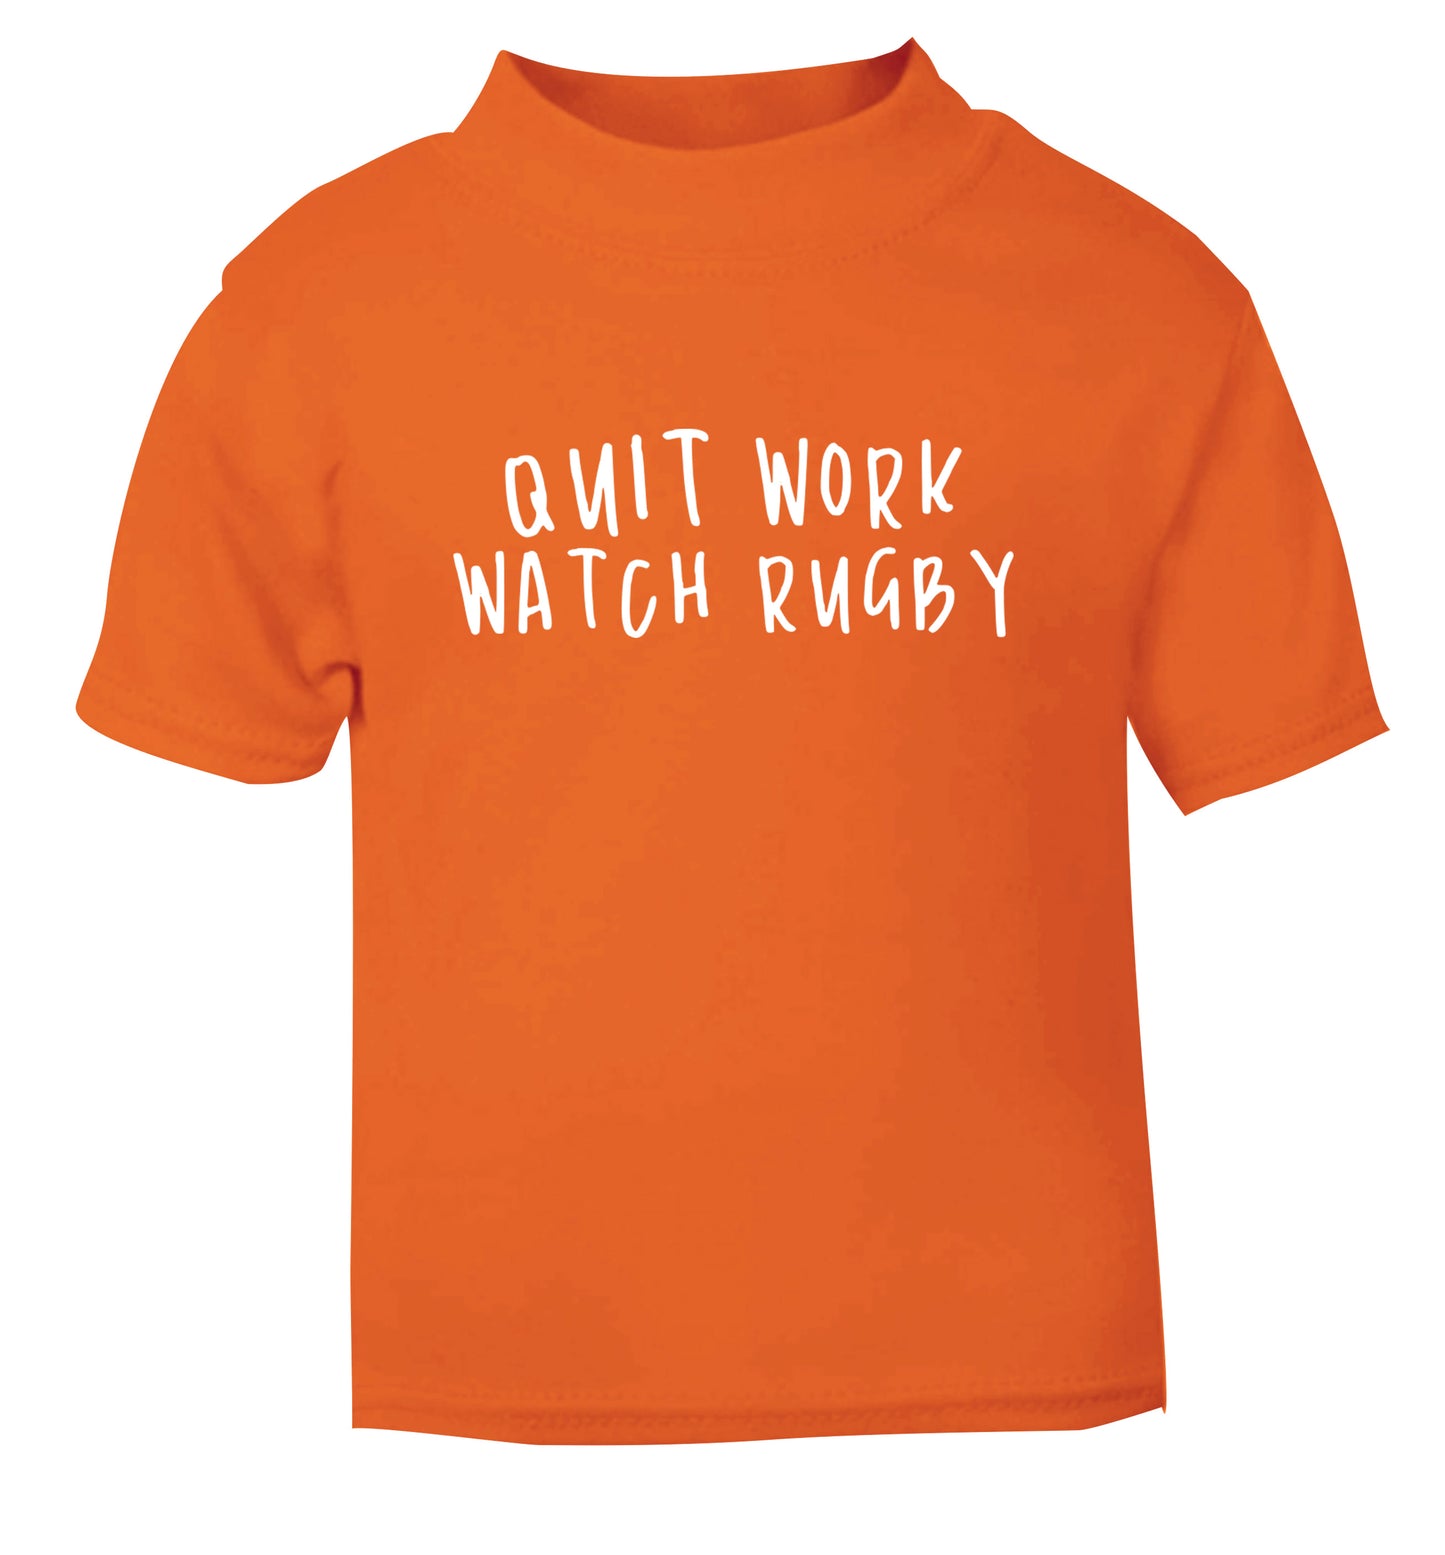 Quit work watch rugby orange Baby Toddler Tshirt 2 Years